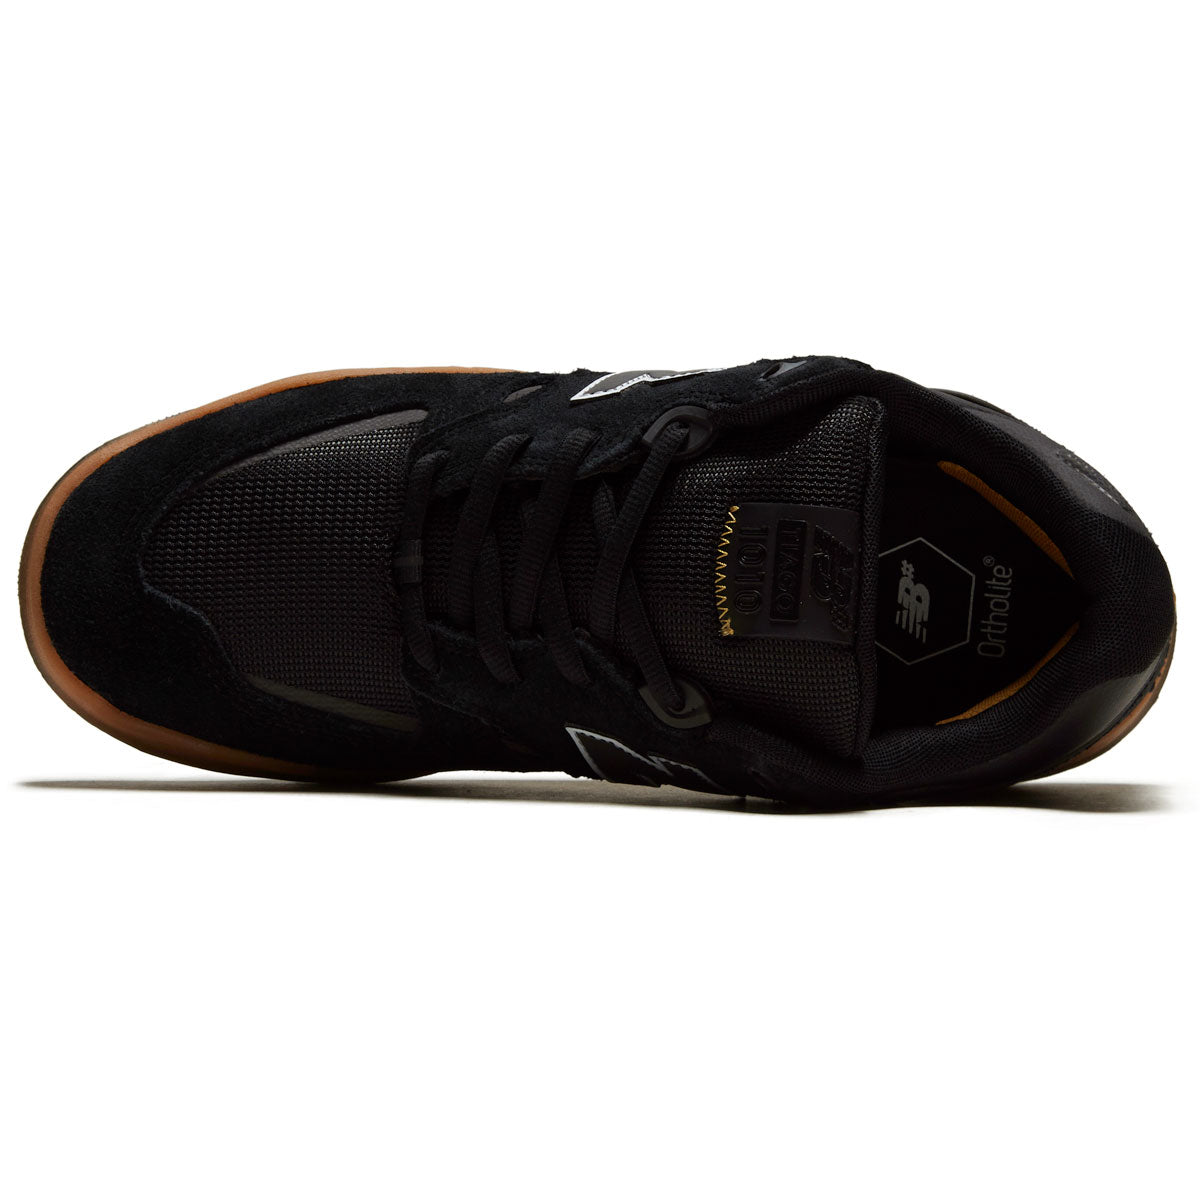 New Balance 1010 Tiago Shoes - Black/Gum image 3